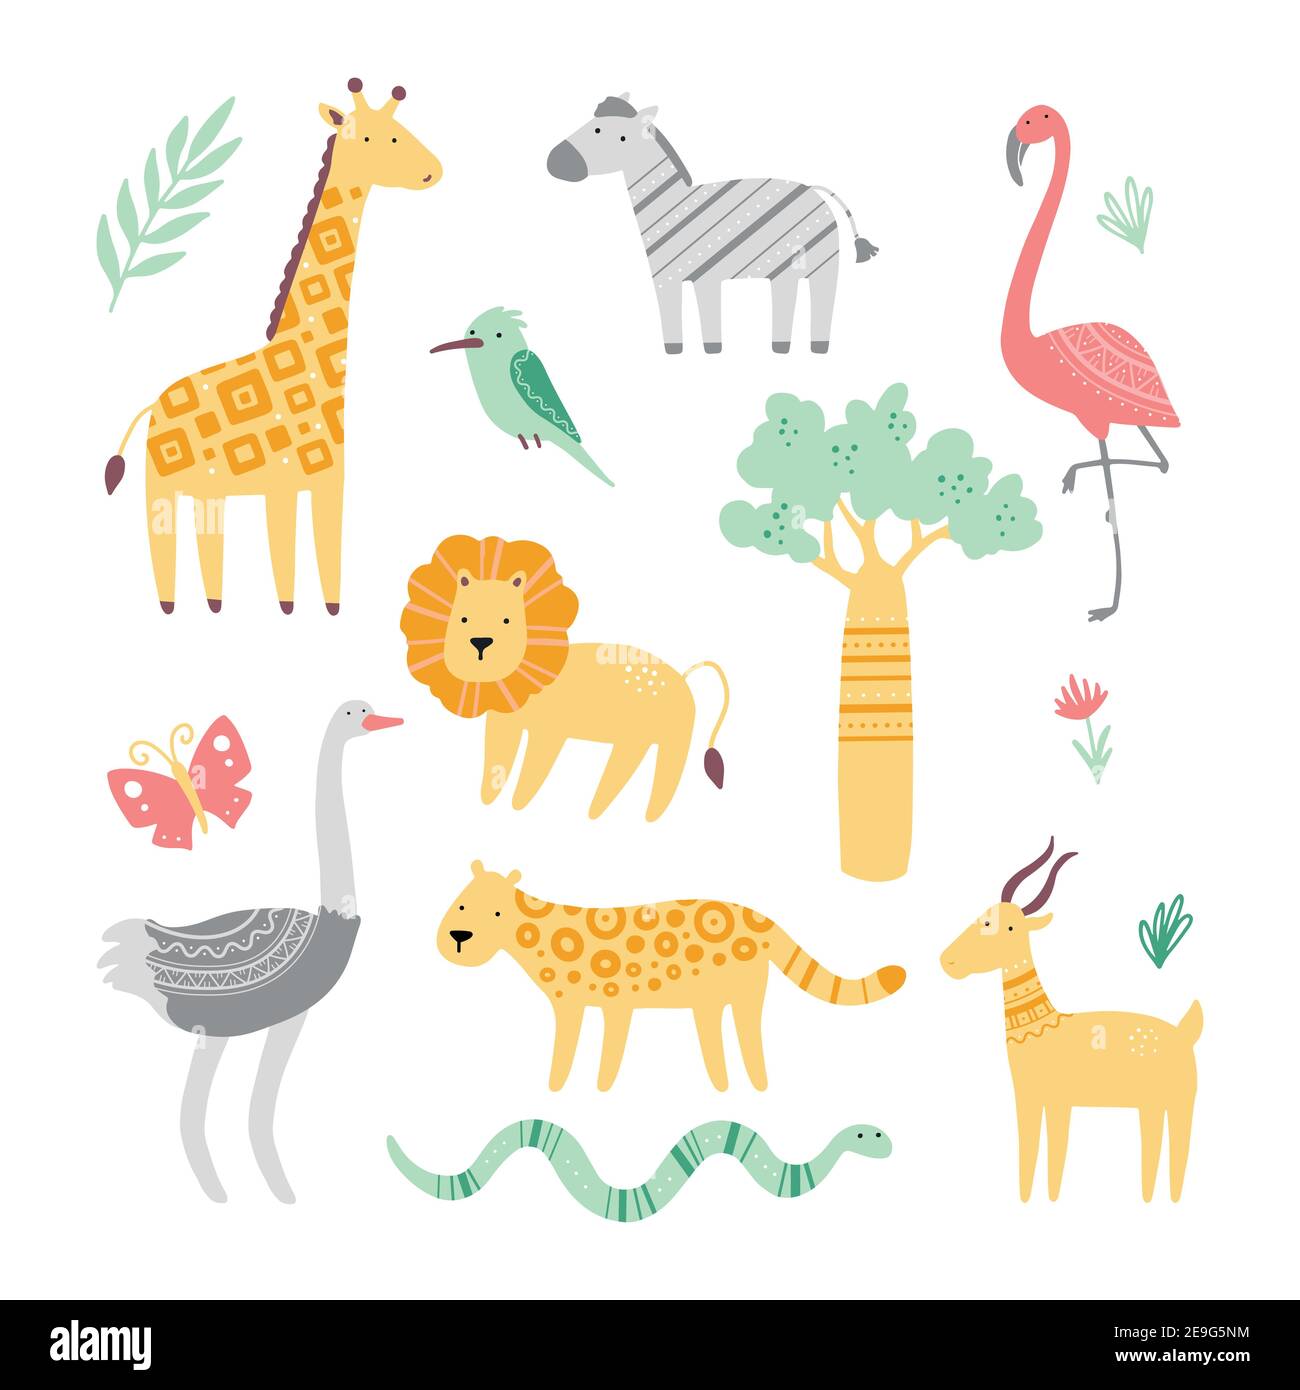 Set of cute african zoo animals giraffe, zebra, lion, bird, snake, lizard, cheetah, crocodile. Flat and simple design style for baby, children illustration. Stock Vector